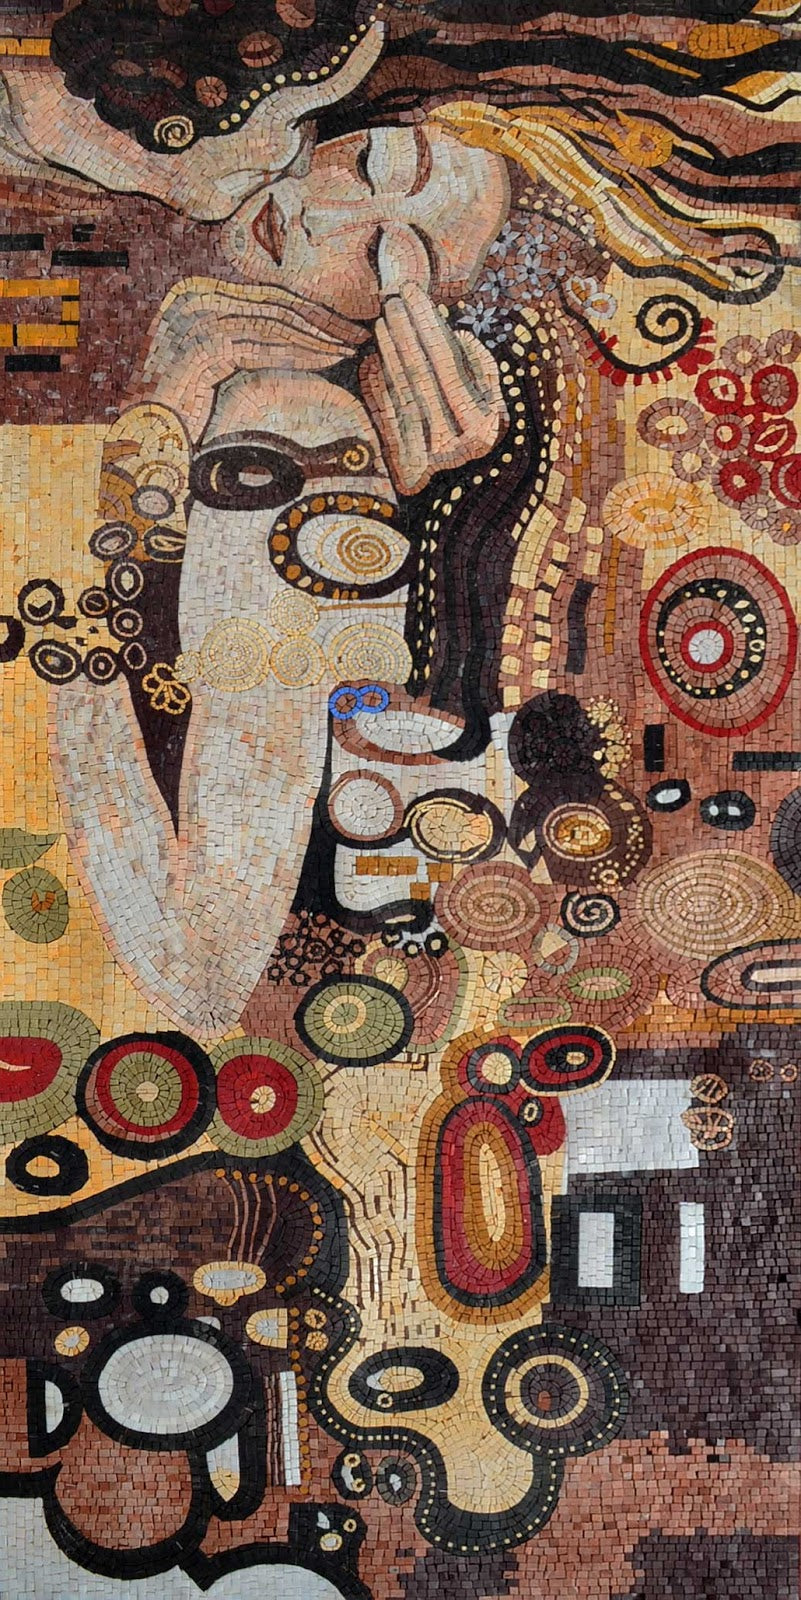 "The Kiss” by Gustav Klimt Mosaic Reproduction